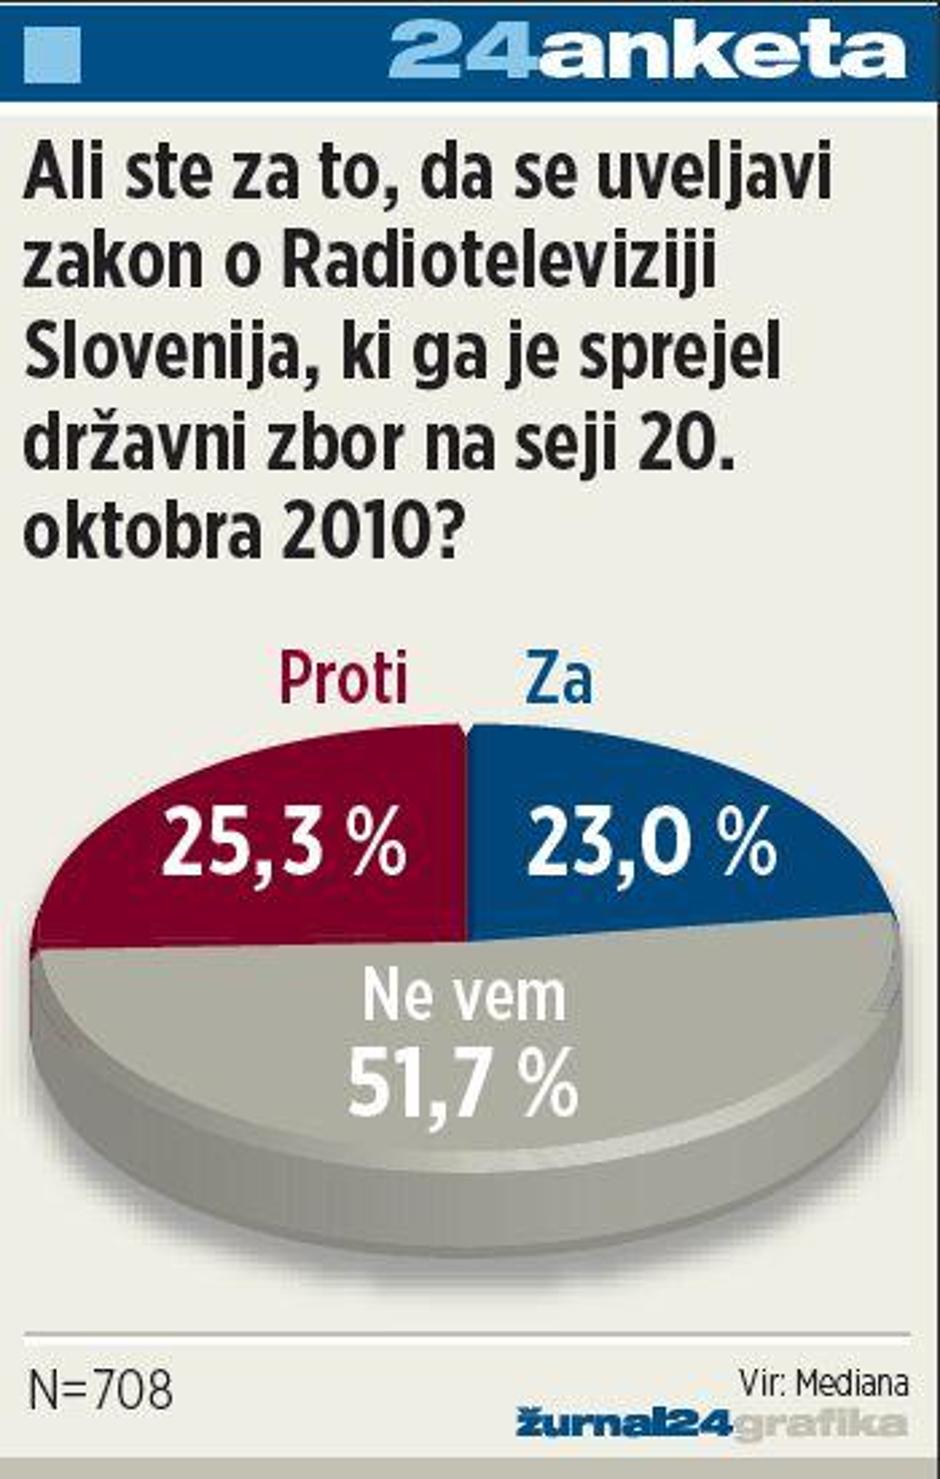 referendum vpra%C5%A1anje | Avtor: Žurnal24 main